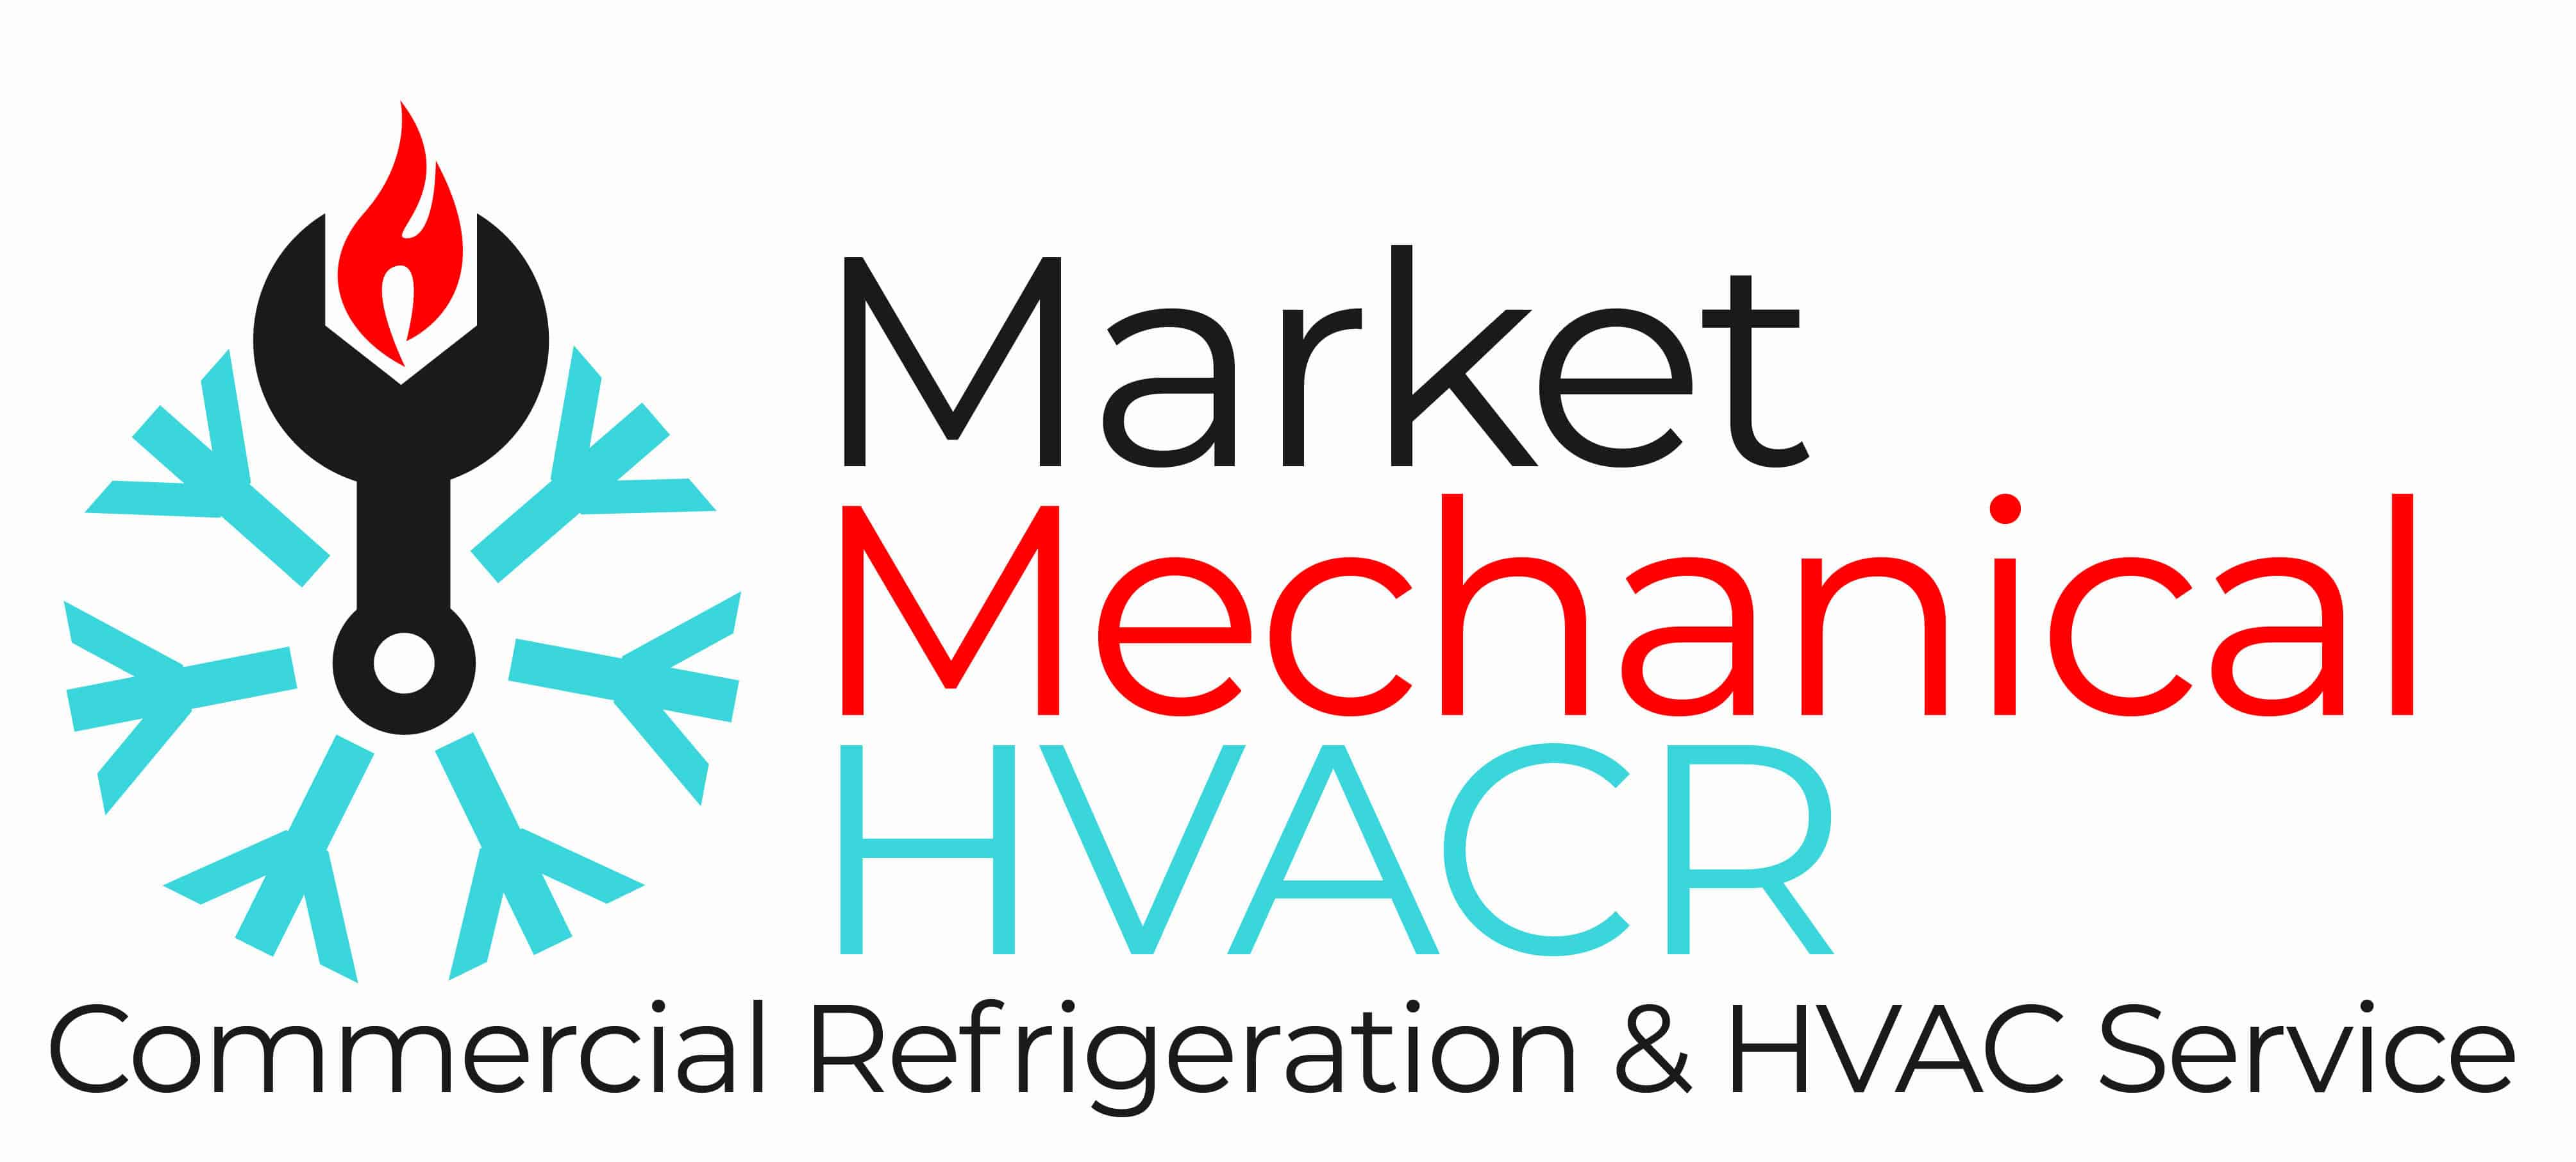 Market Mechanical HVAC-Commercial Refrigeration & HVAC Service